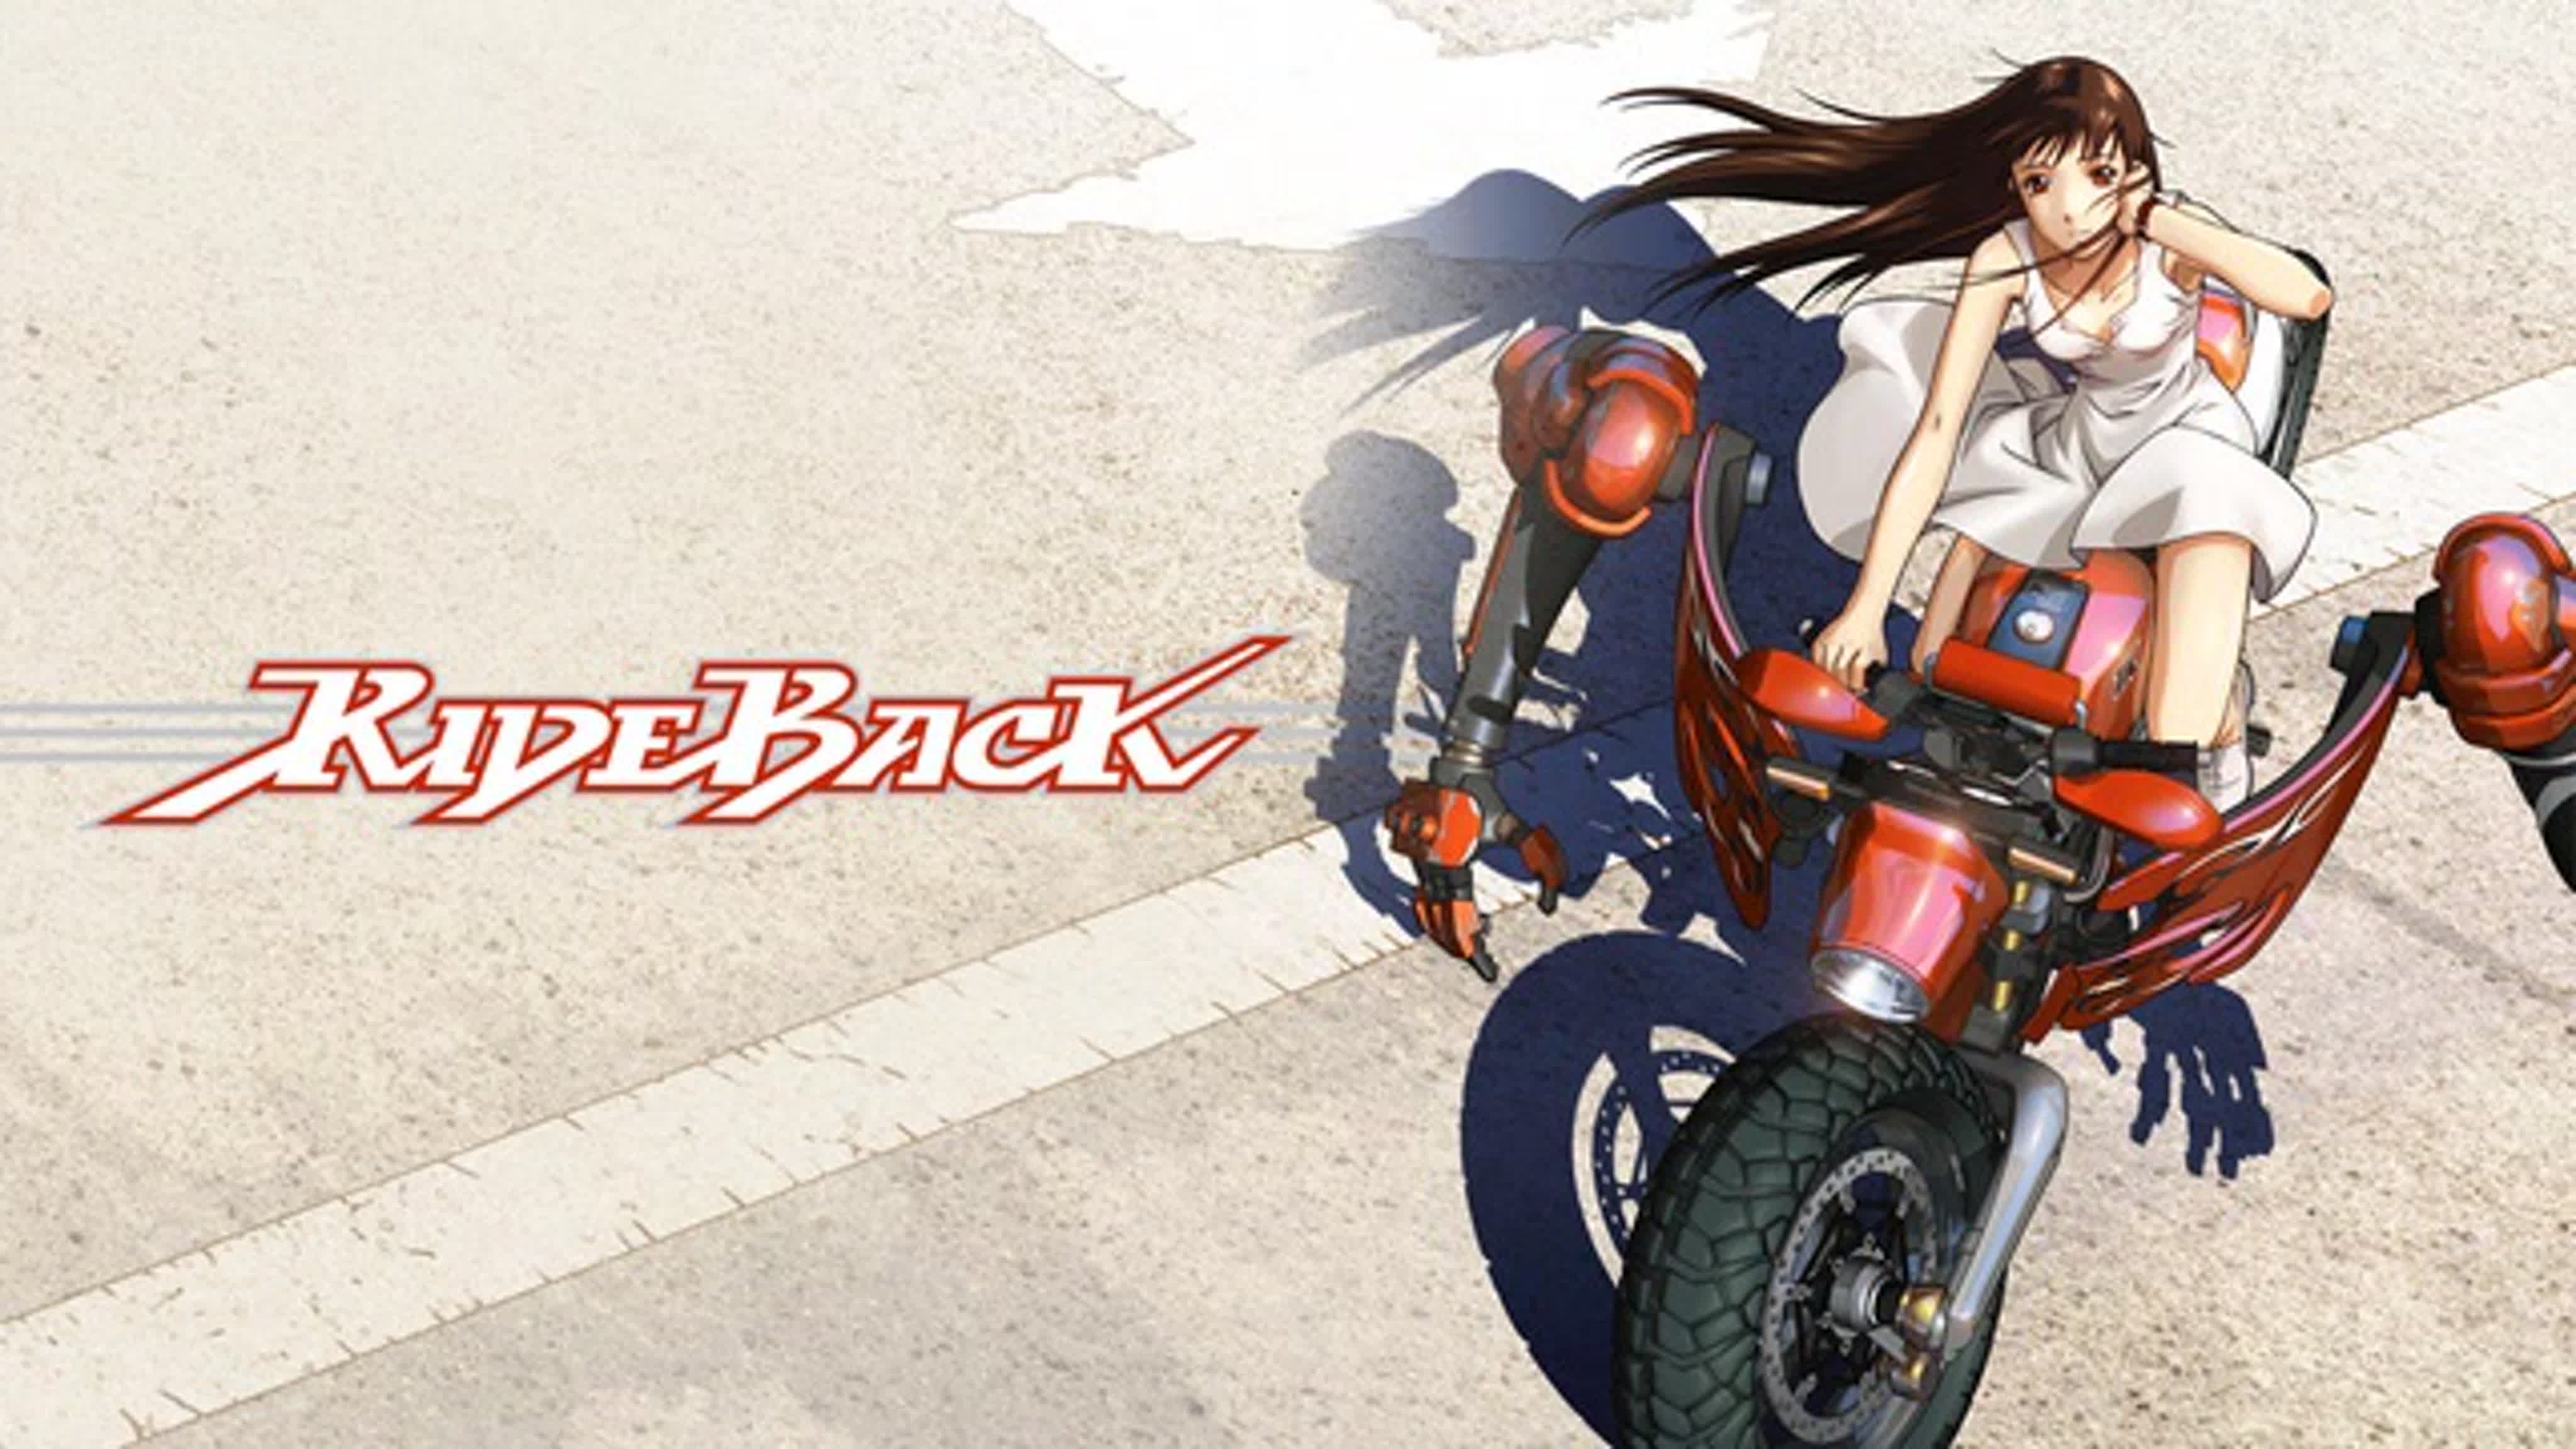 Райдбэк Ride Back RideBack